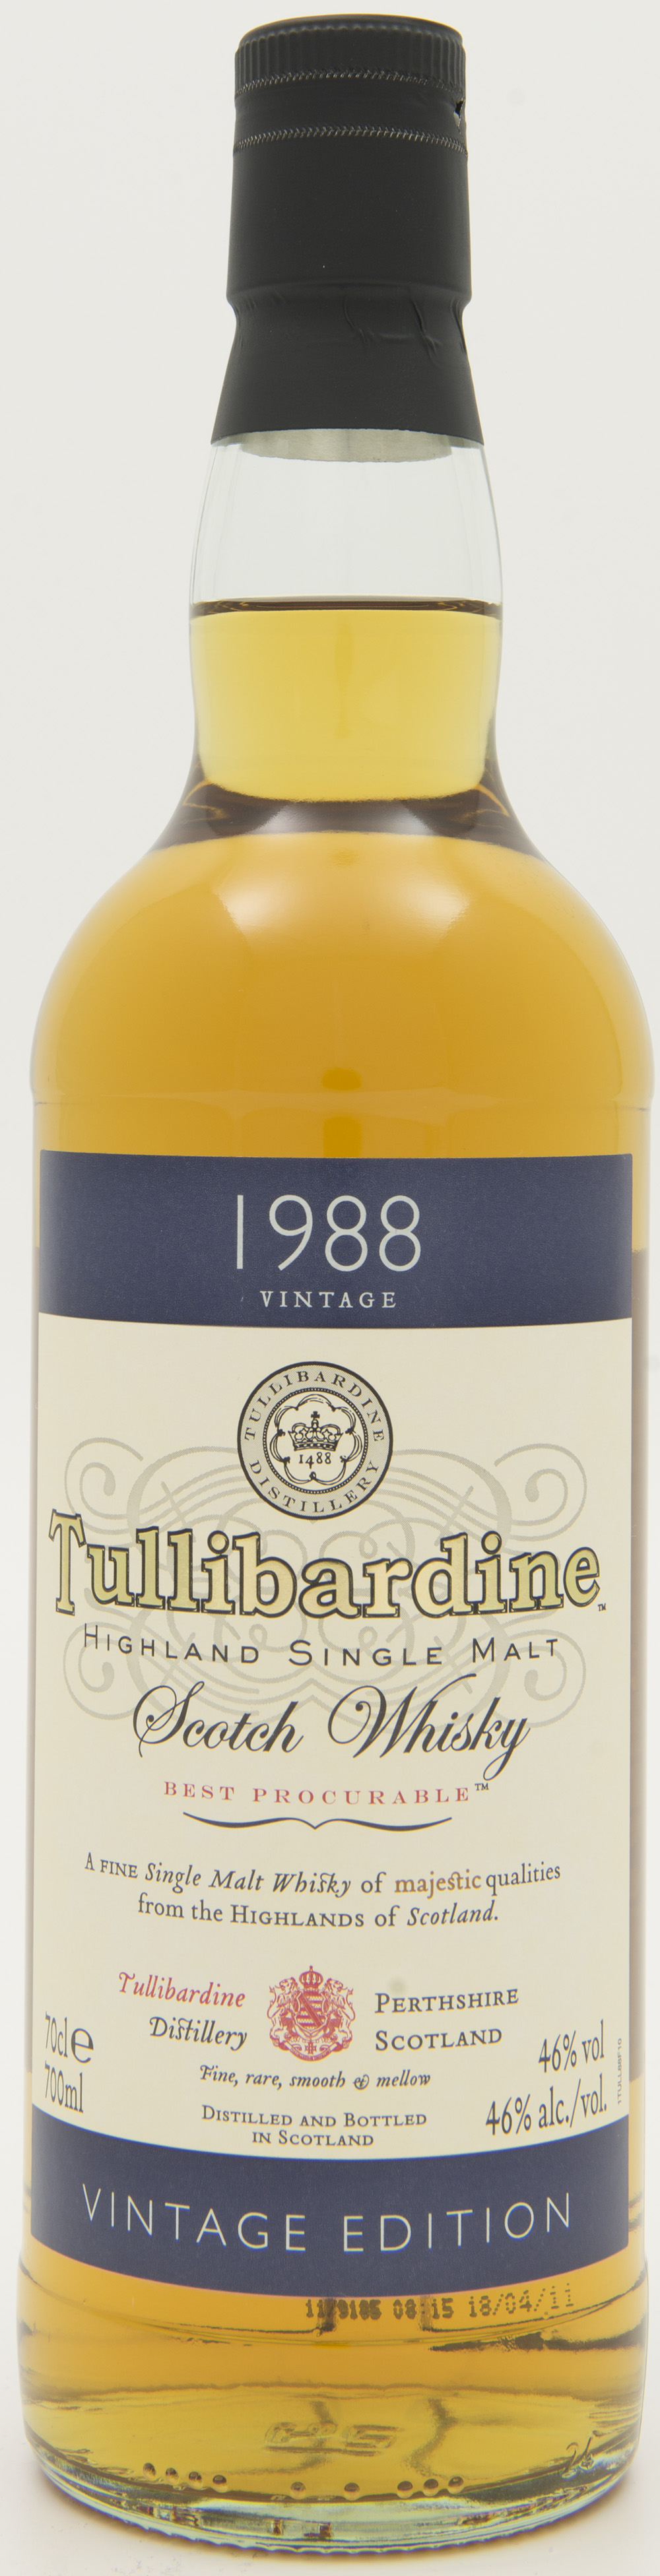 Billede: DSC_3731 Tullibardine 1988 Vintage - bottle front.jpg